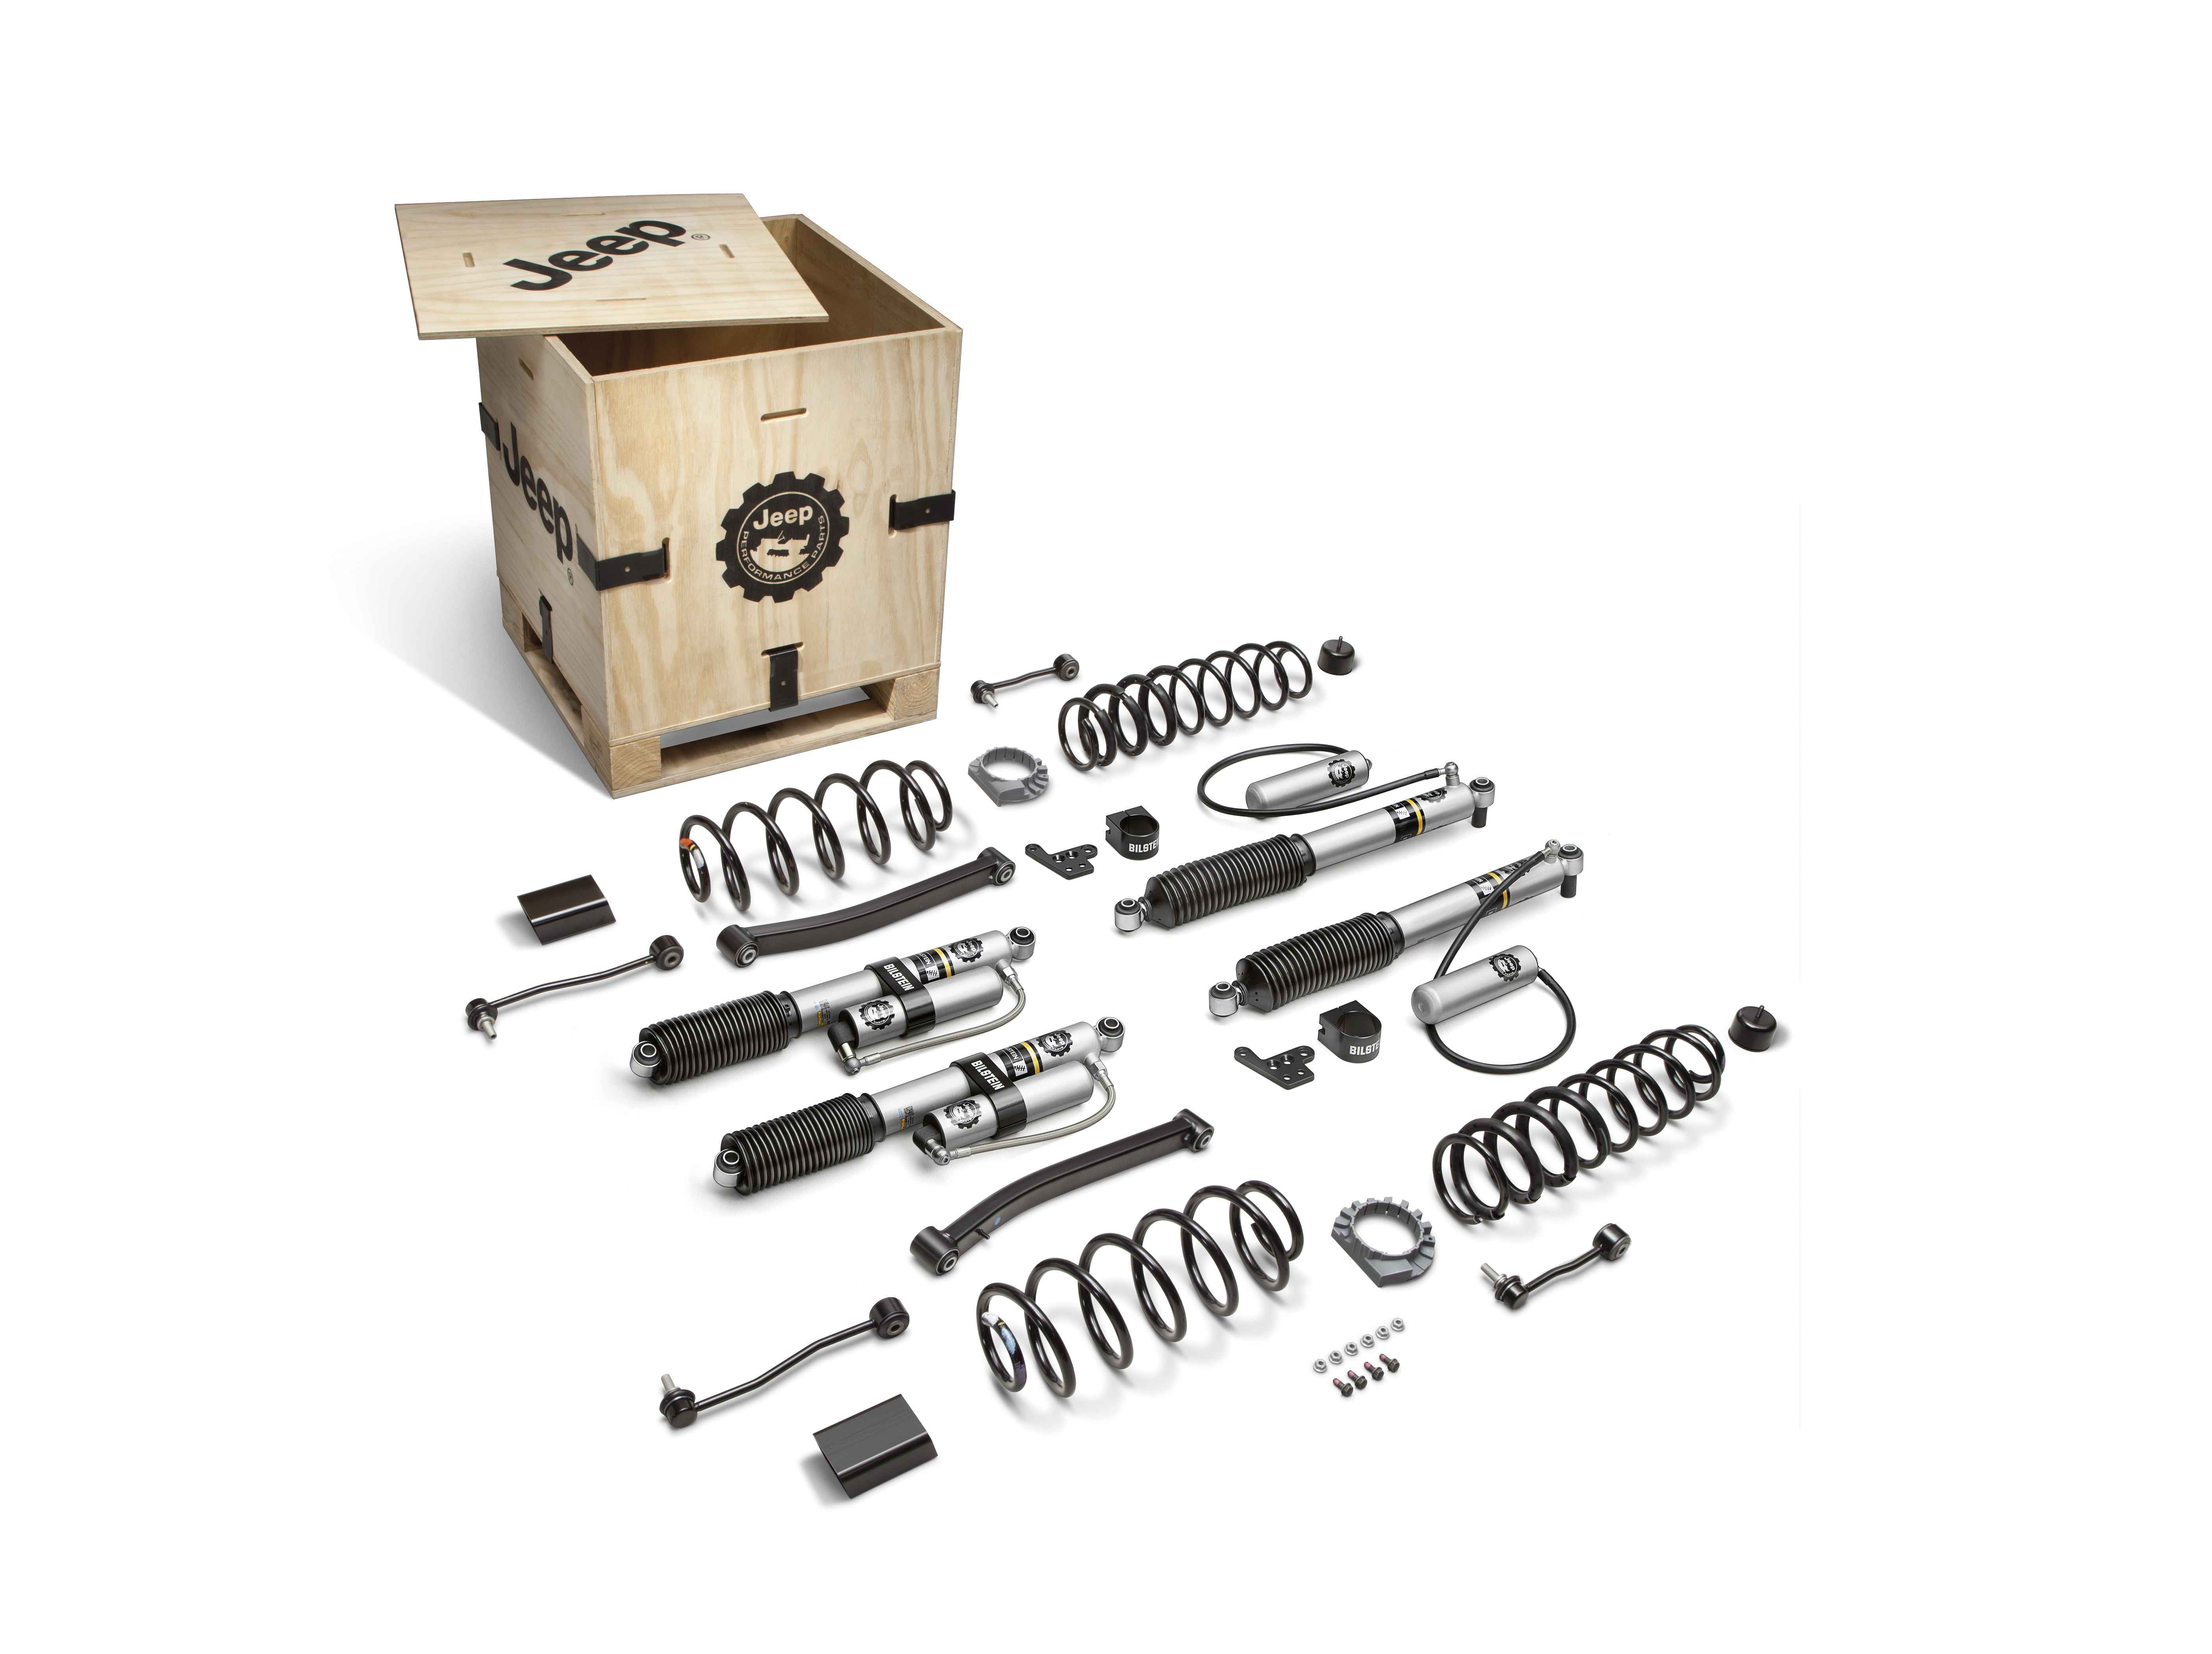 Jeep Performance Parts 2-inch Lift Kit with Bilstein Reservoir Shocks, 20L Turbo Engine